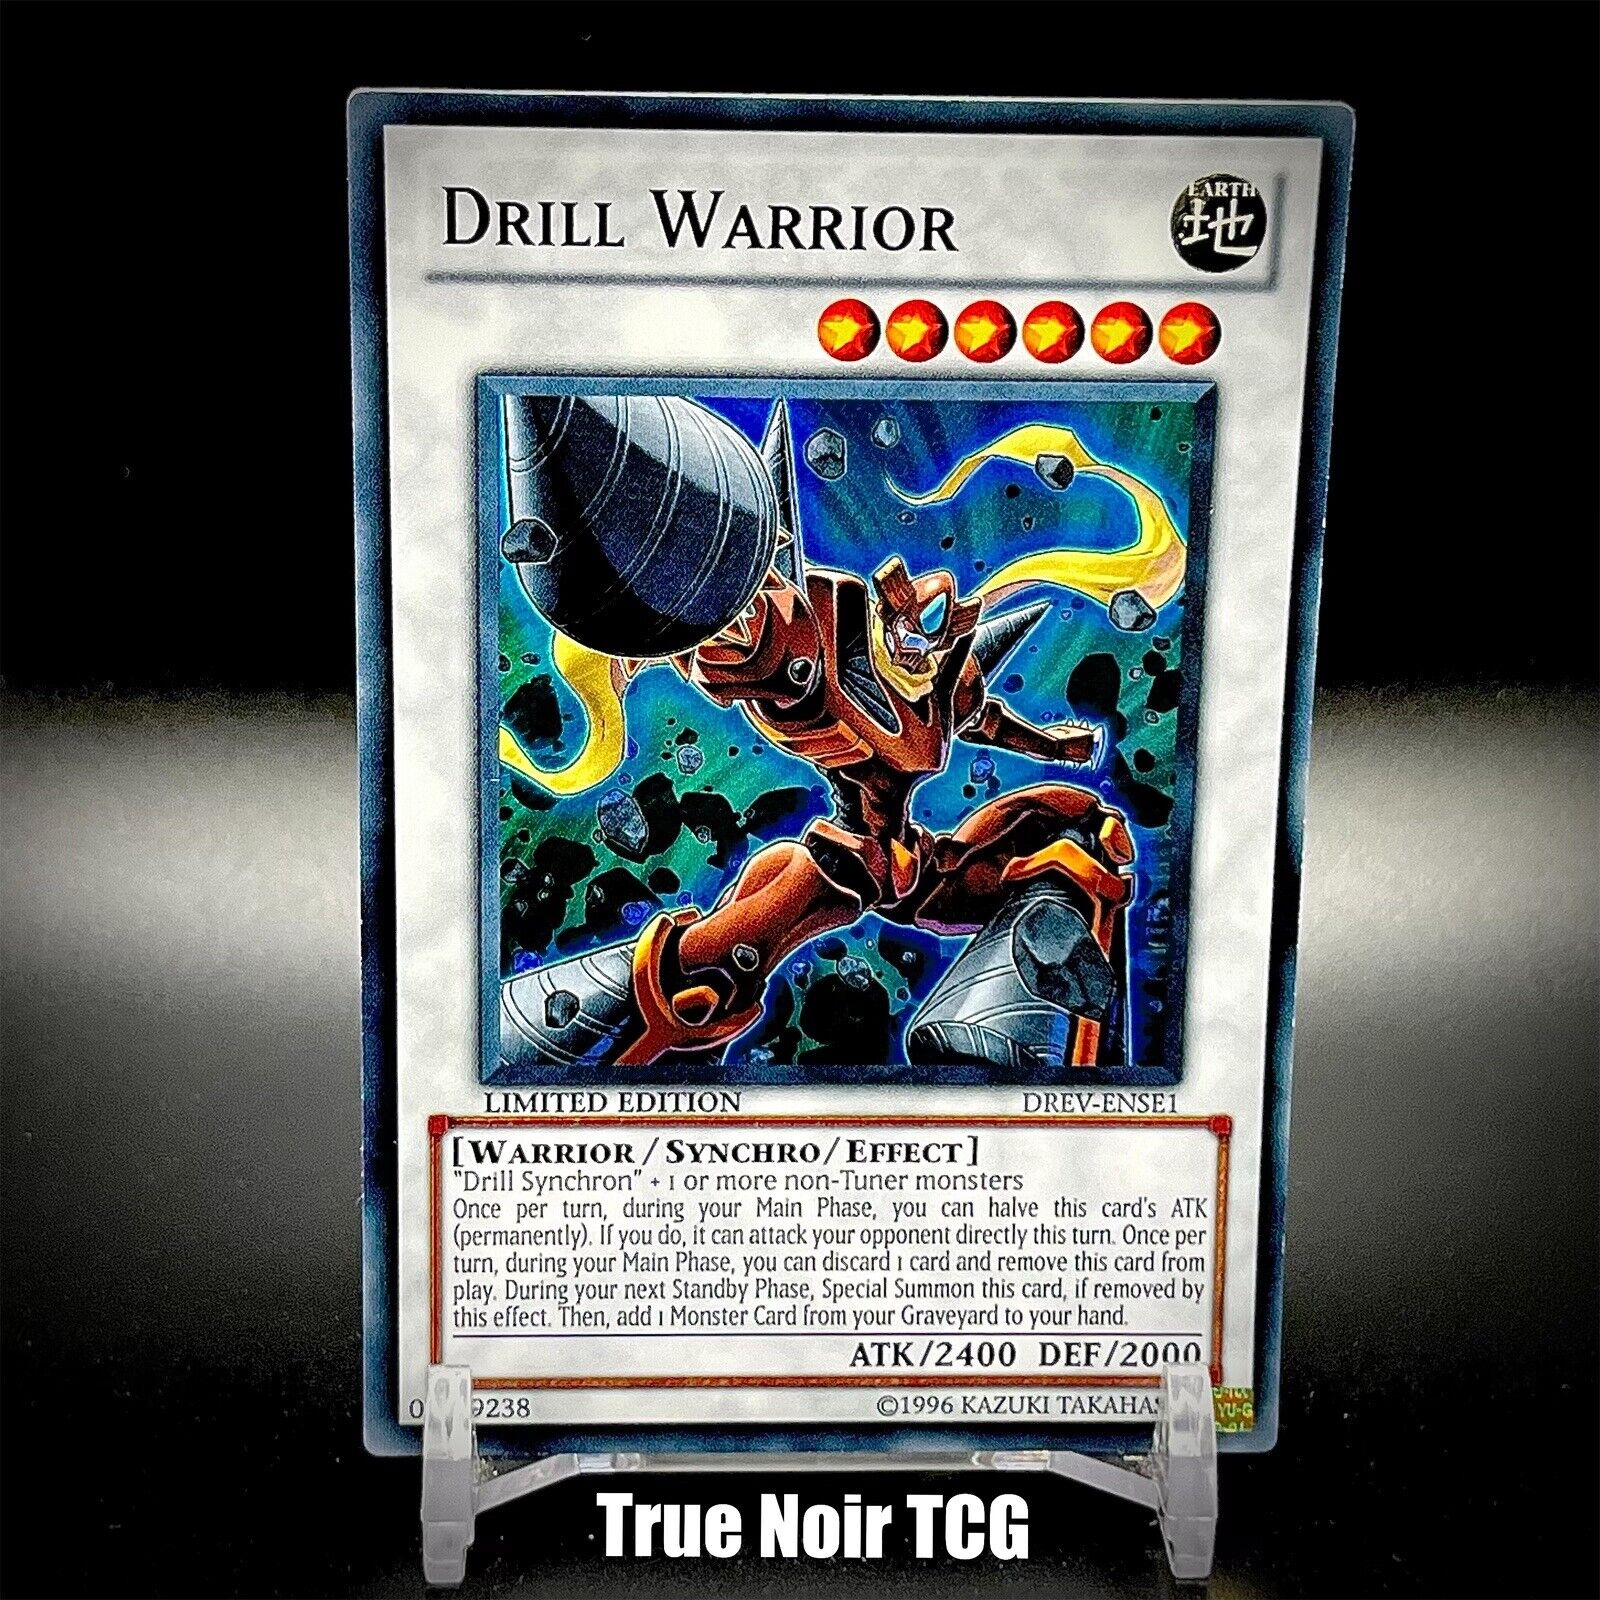 Drill Warrior DREV-ENSE1 Super Rare Limited Edition (LP)